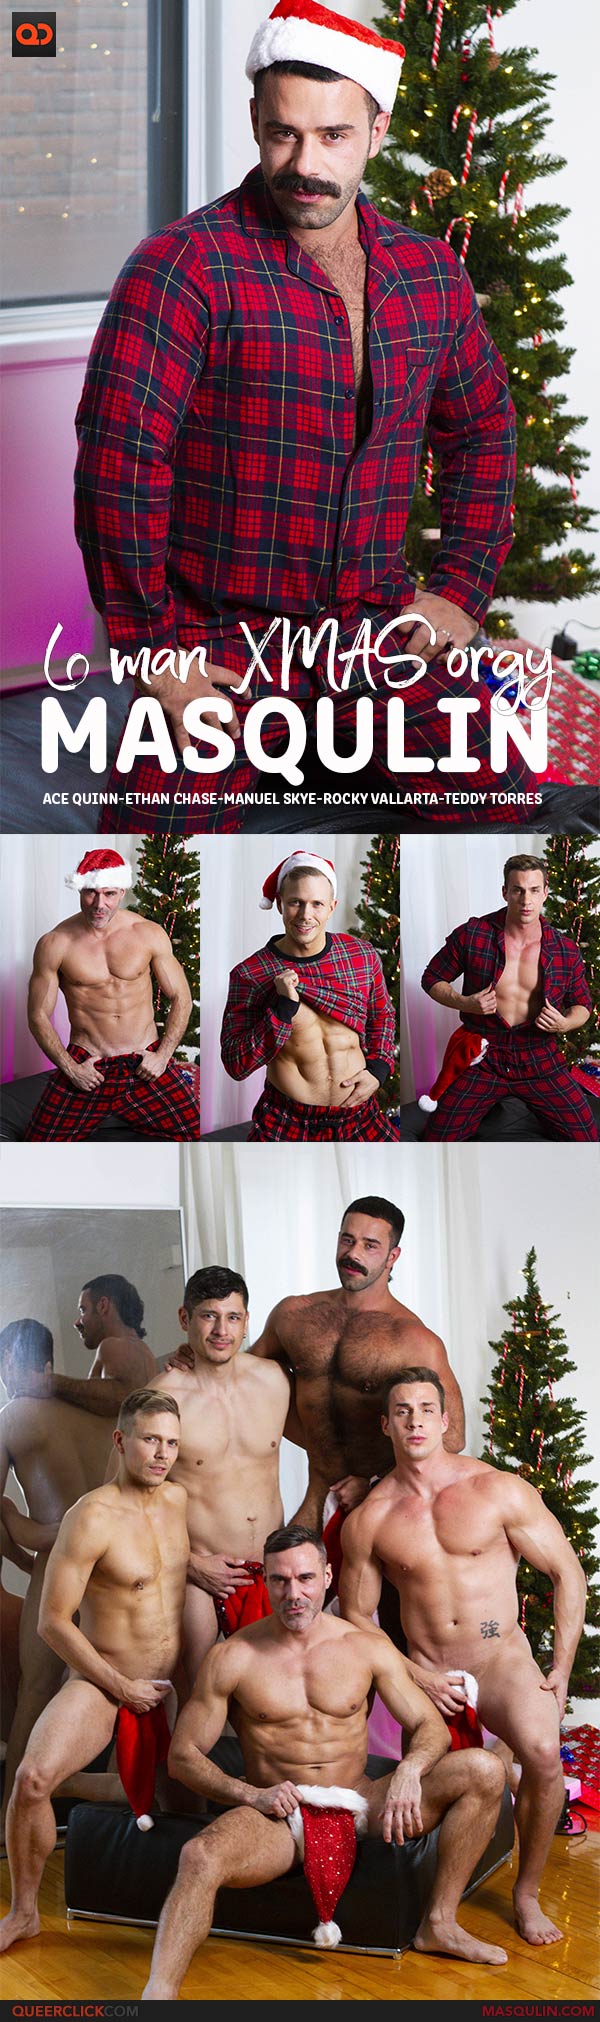 Masqulin: Ace Quinn , Ethan Chase, Manuel Skye, Rocky Vallarta and Teddy Torres - 12DAYSOFXXXMAS SAVINGS